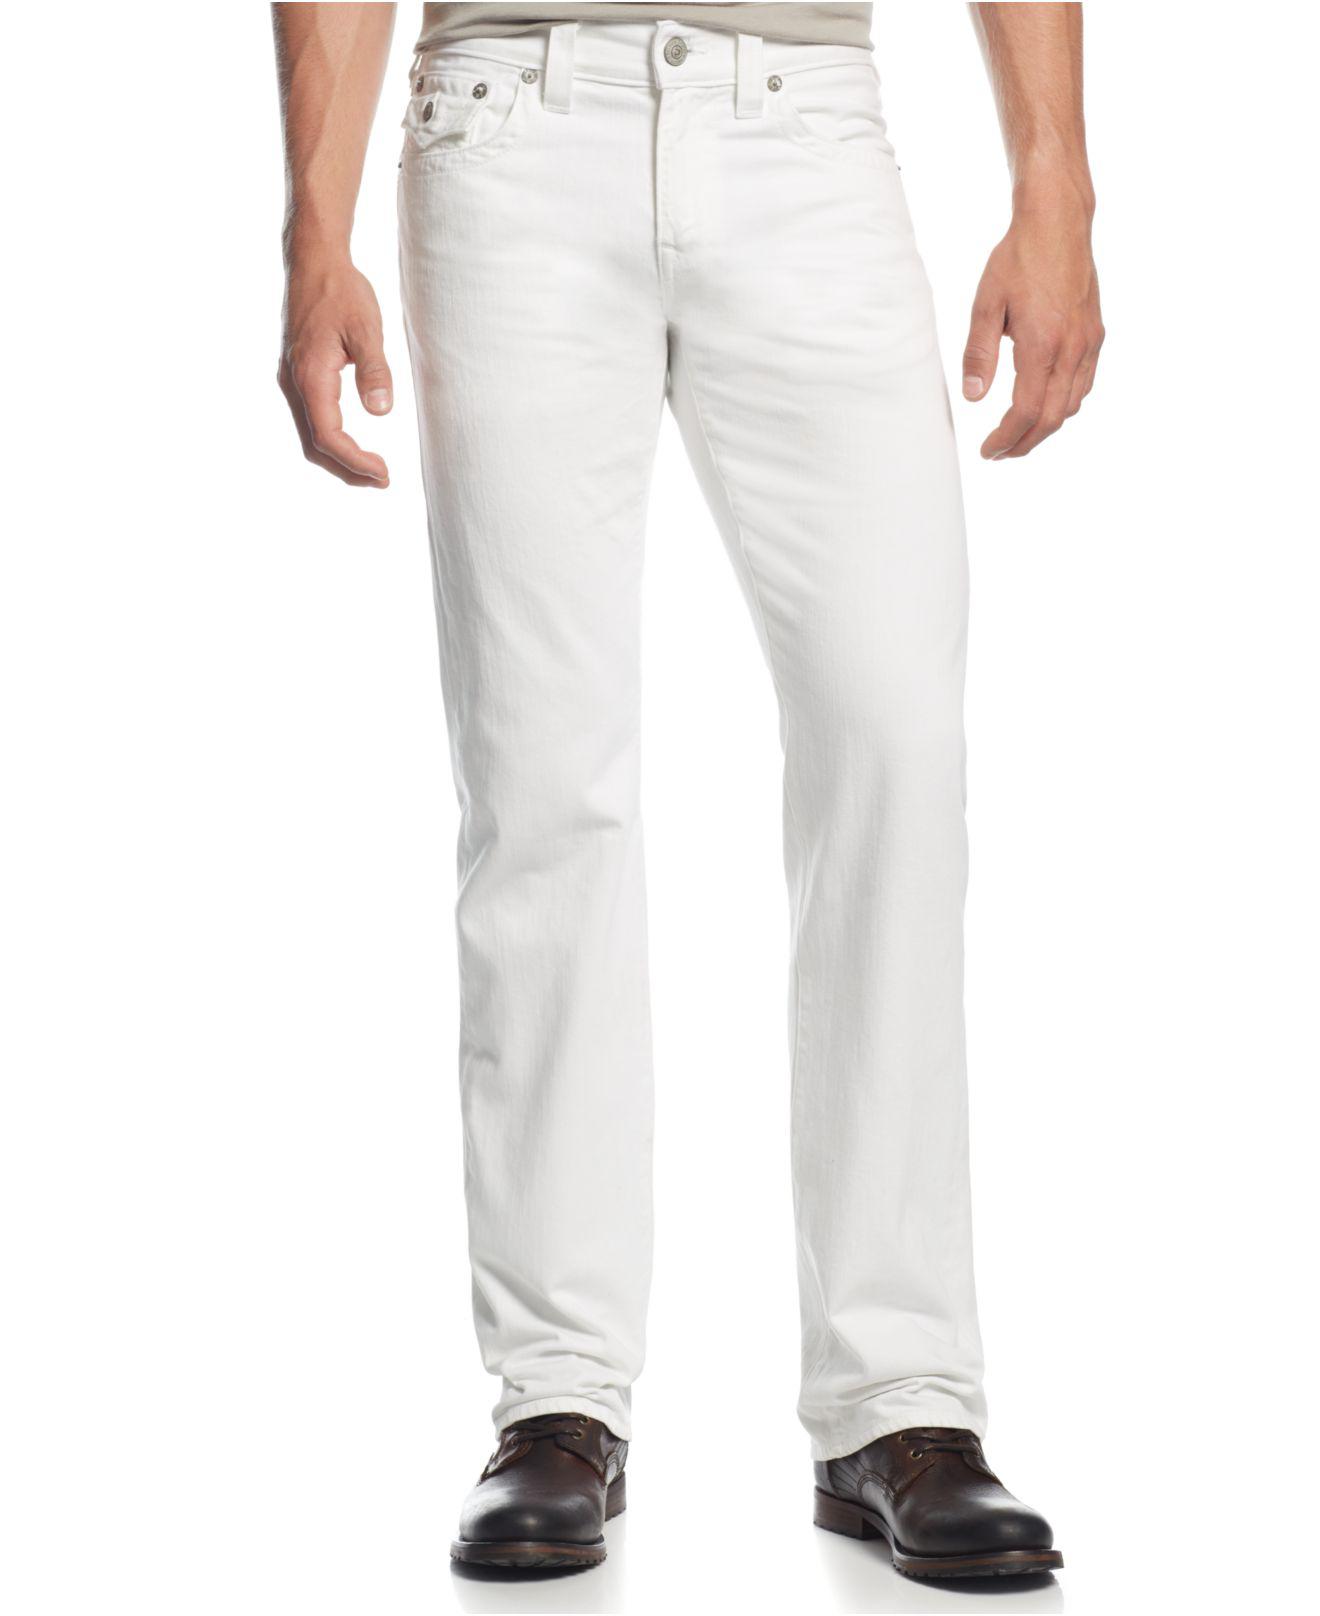 Lyst - True Religion Ricky Relaxed Straight Jeans in White for Men